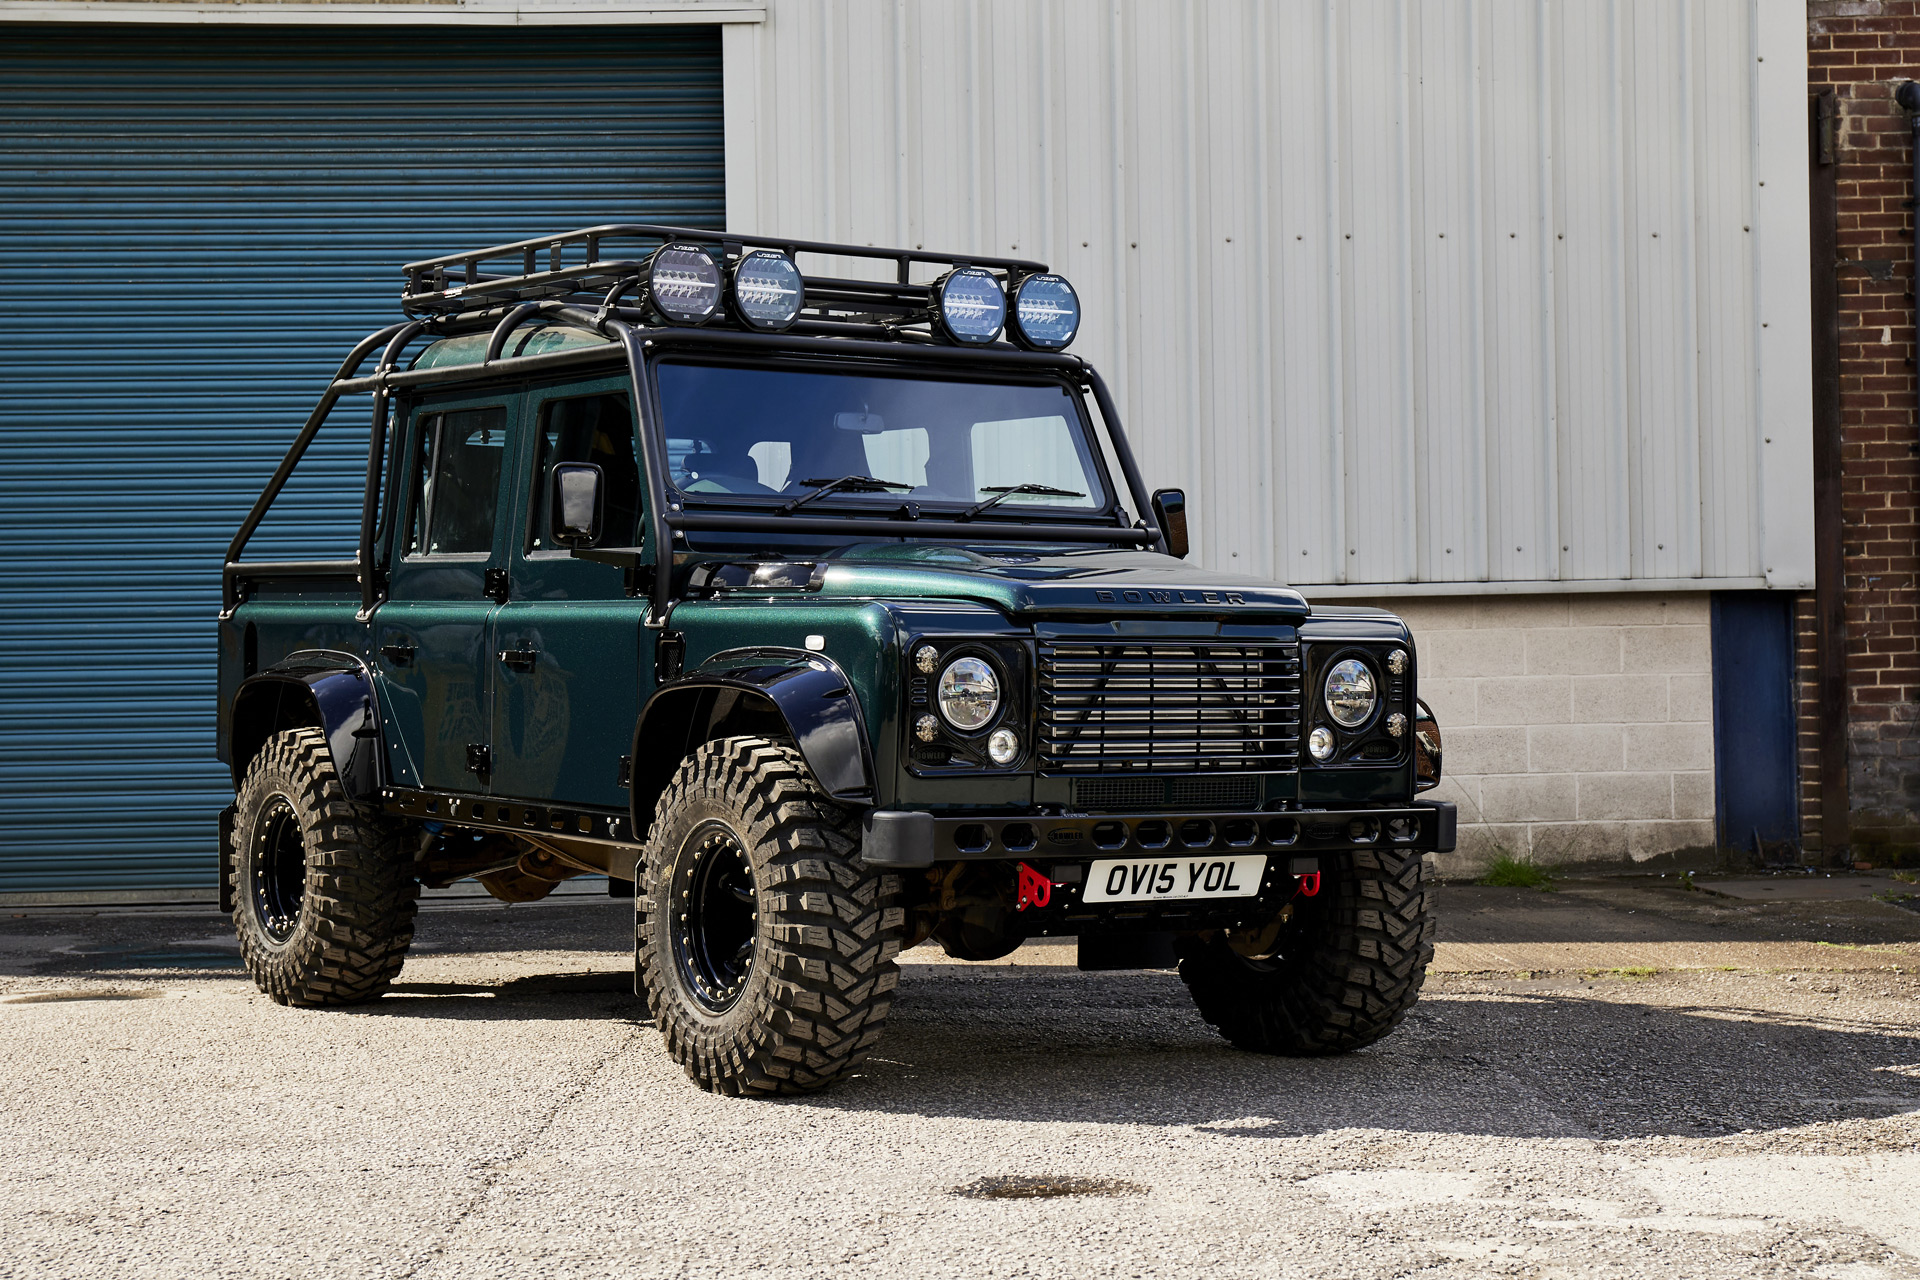 Land Rover’s Bowler division reveals Extreme conversion for original Defender Auto Recent